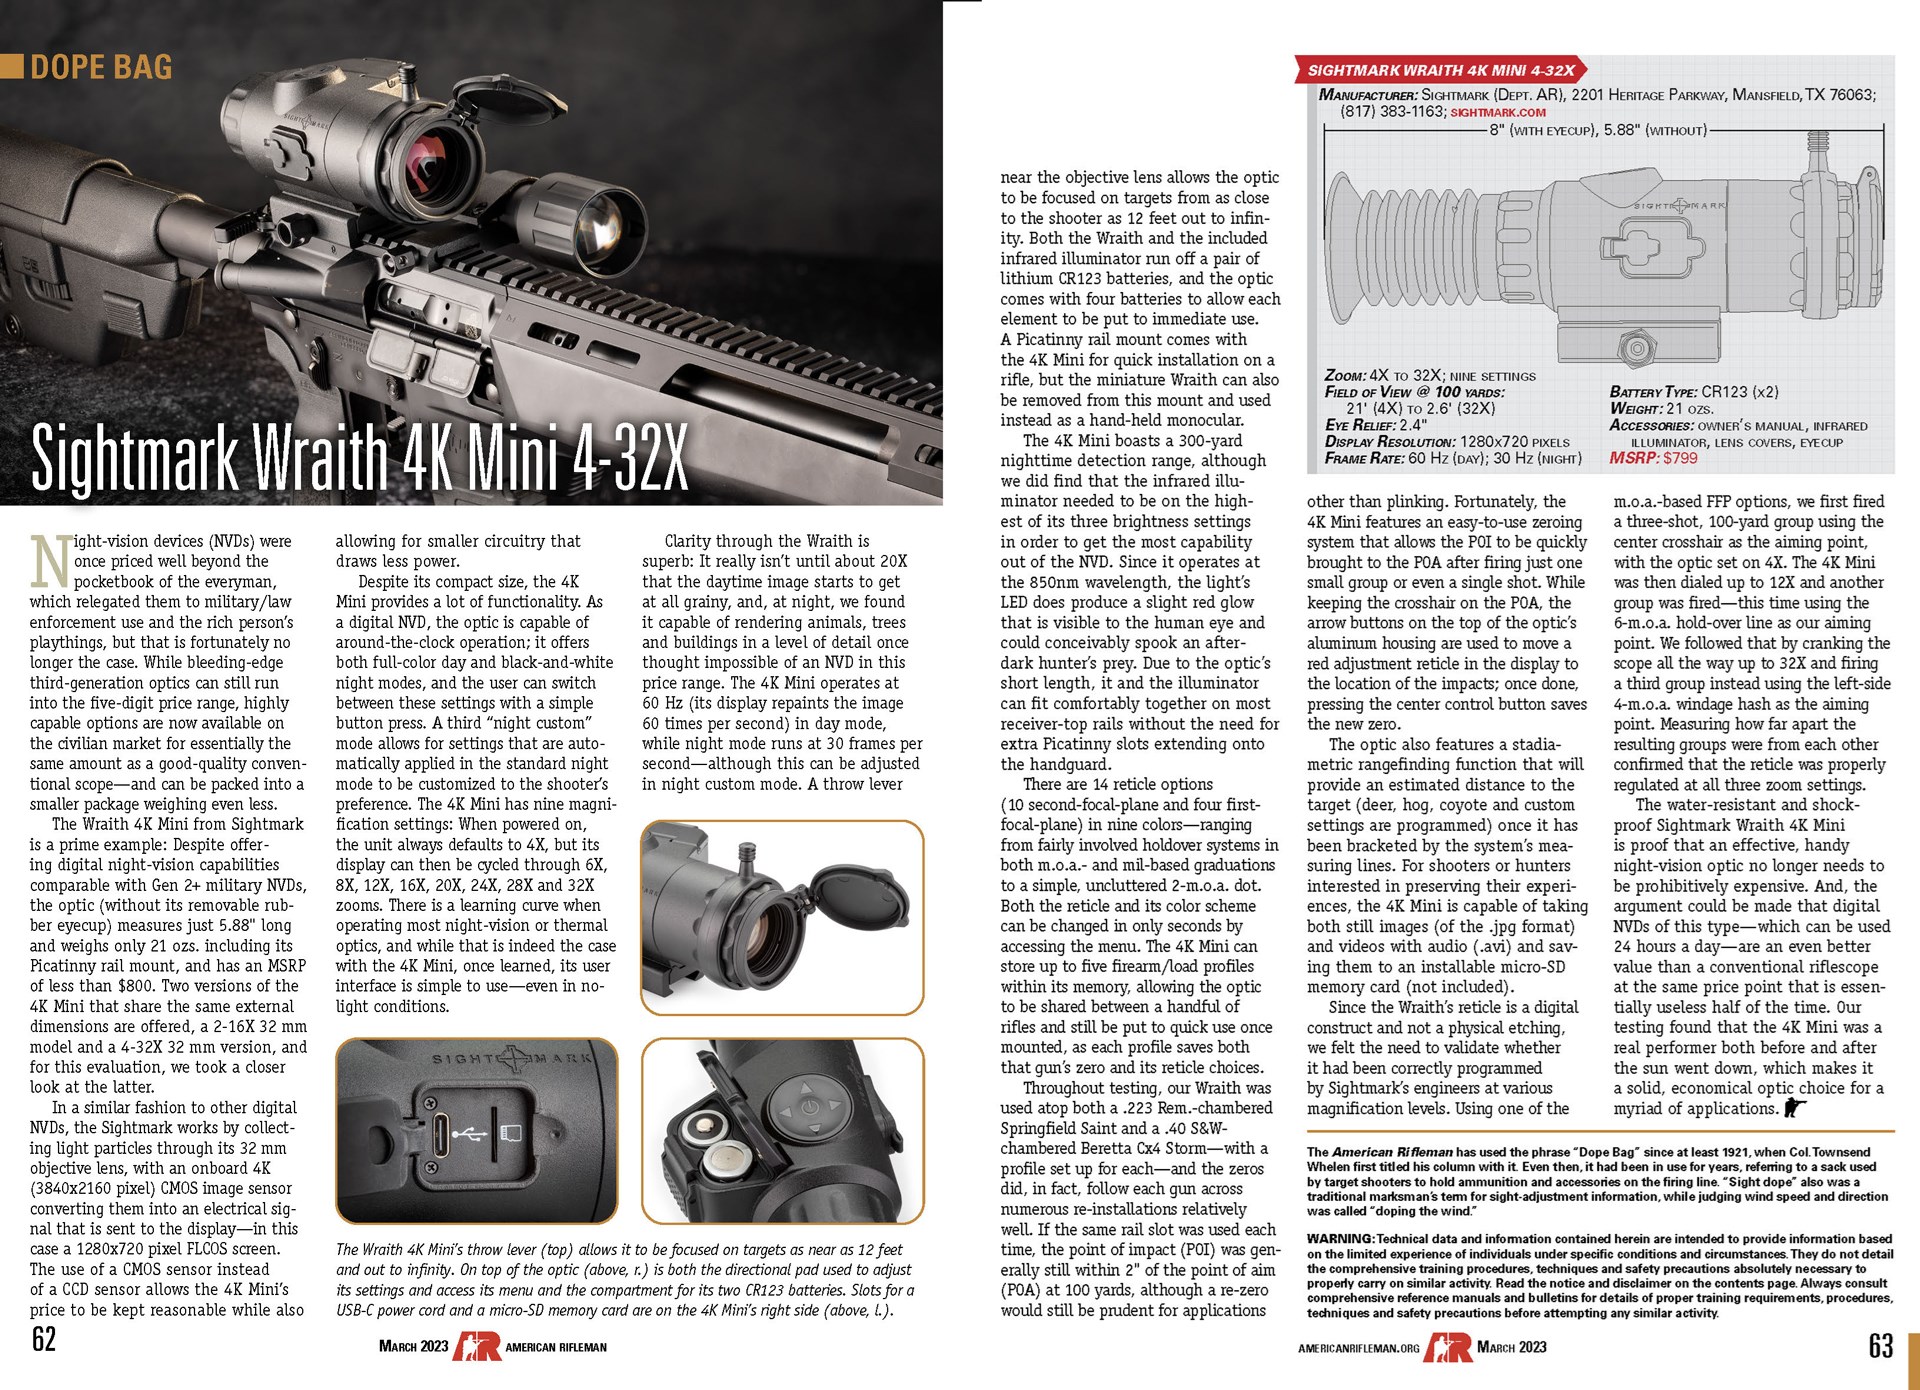 American Rifleman Dope Bag review pages screenshot magazine article words images gun rifle optics SIGHTMARK WRAITH 4K MINI night vision